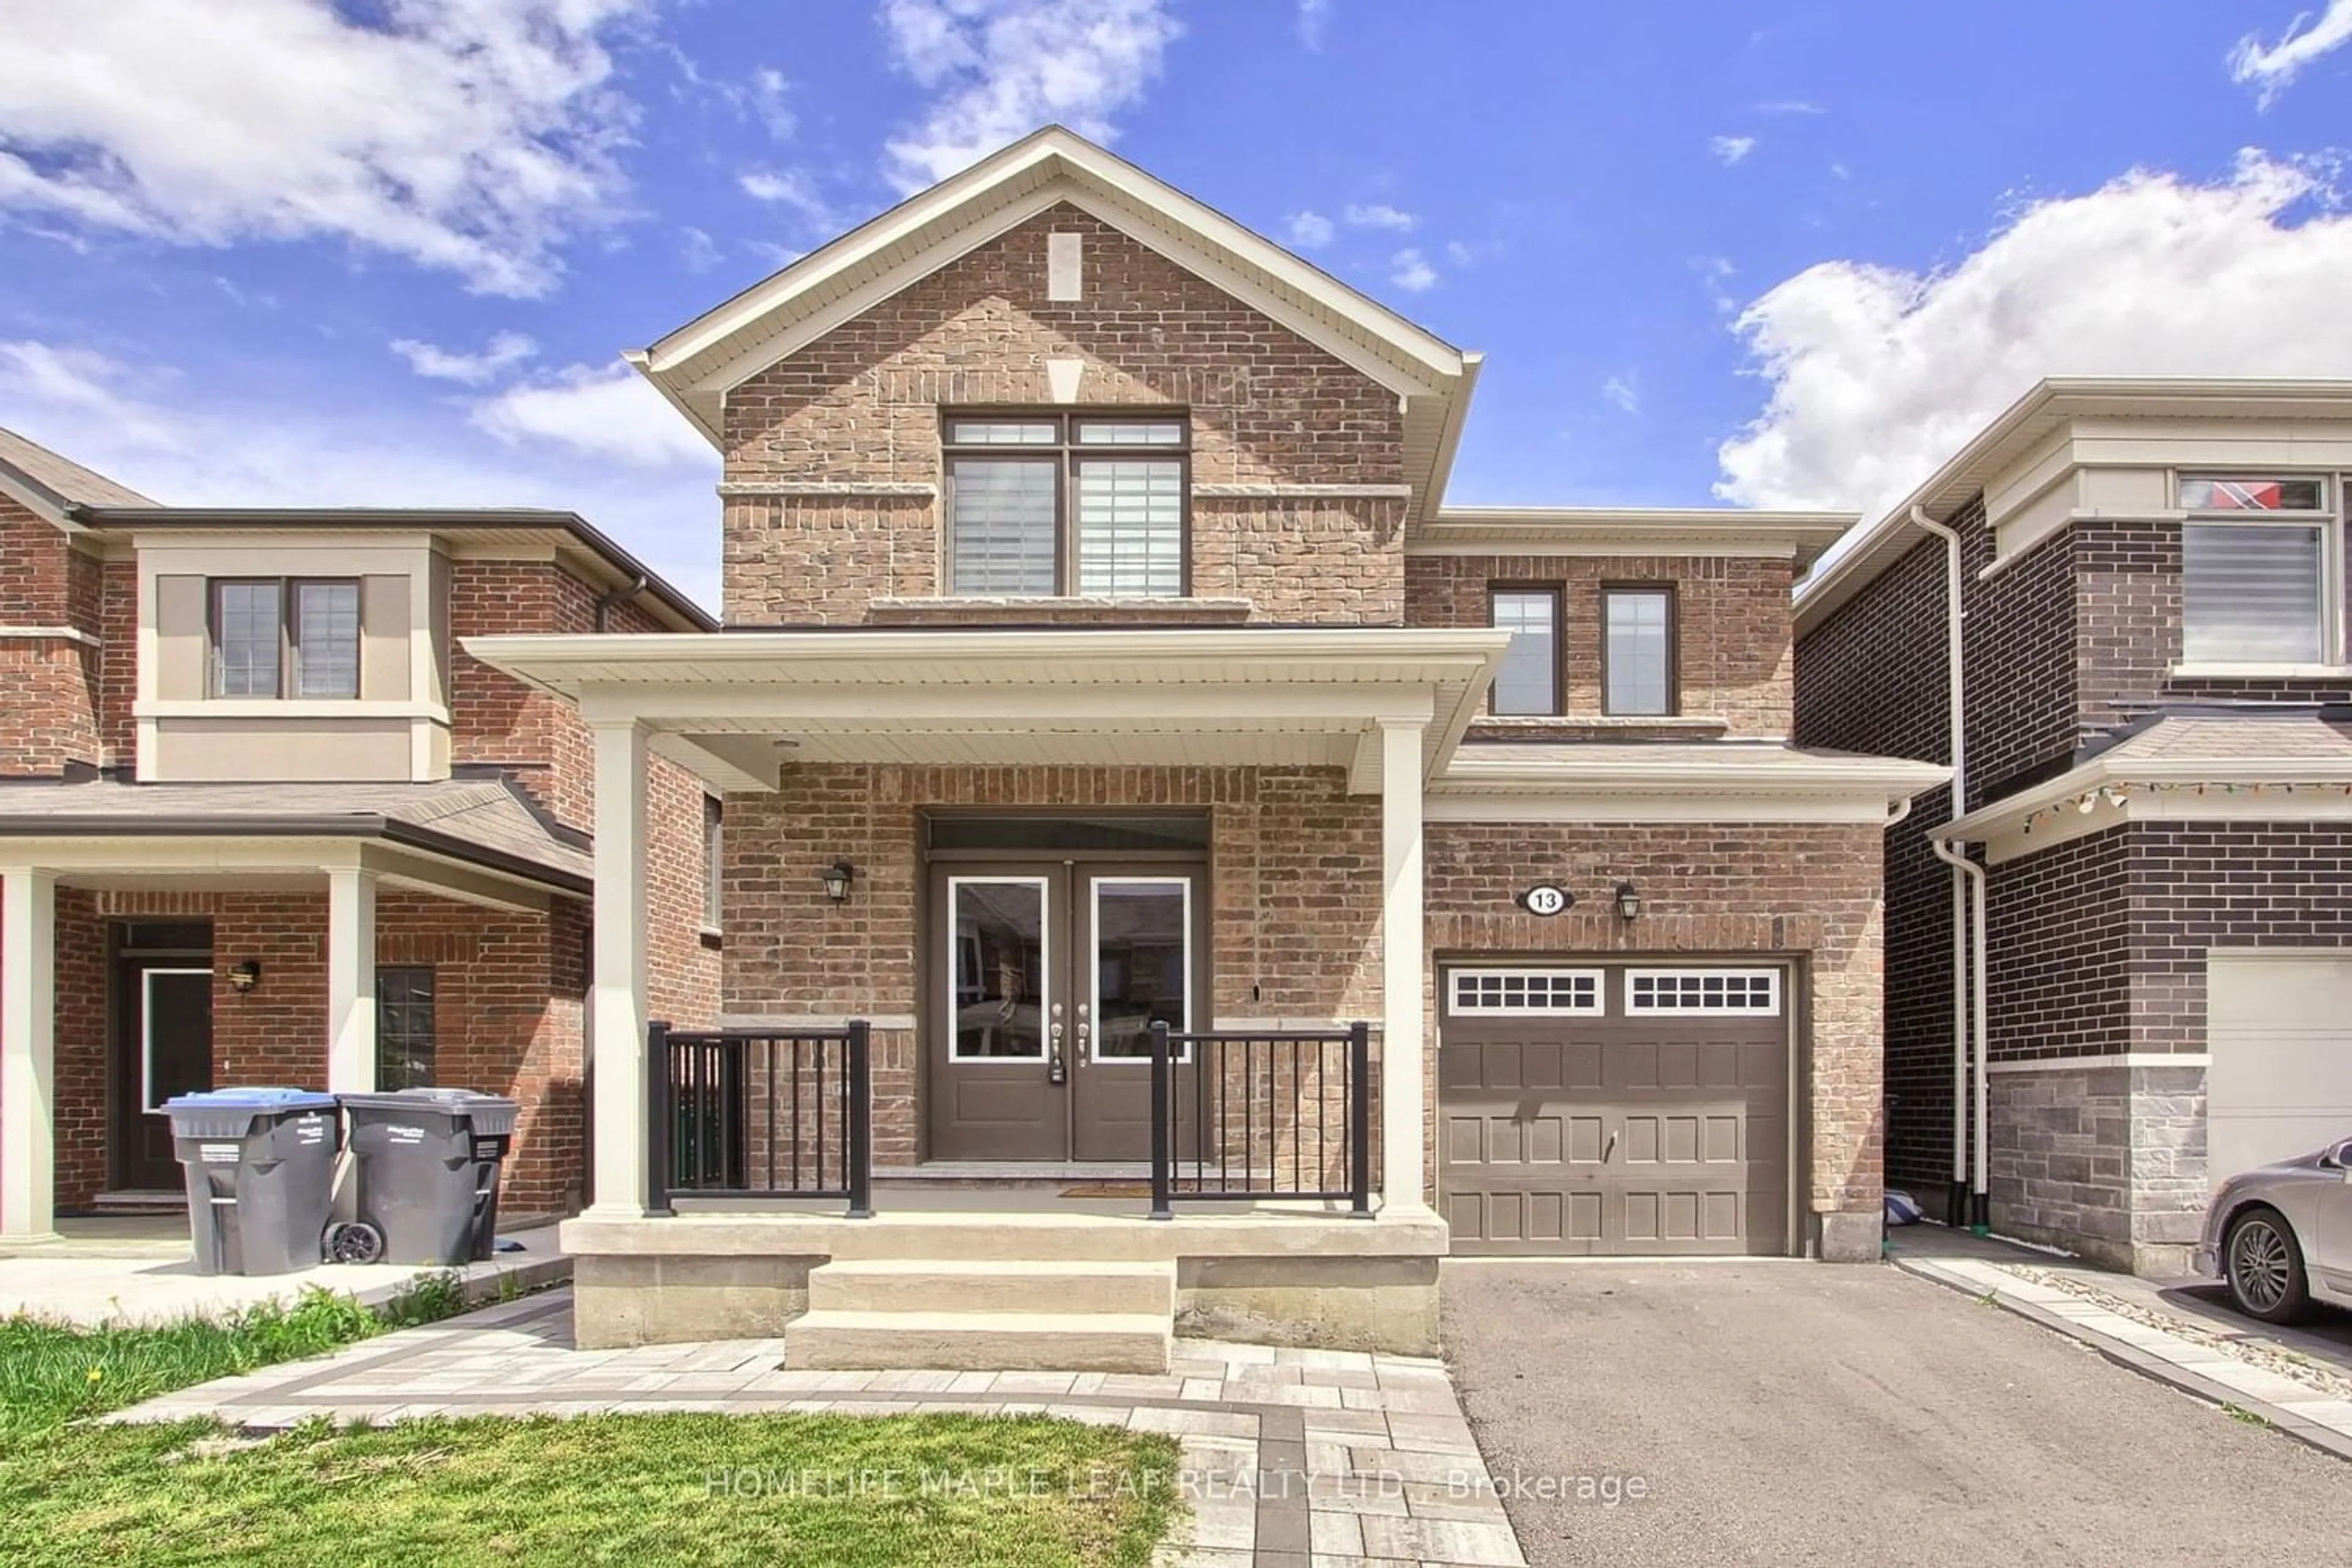 Home with brick exterior material for 13 Emily St, Brampton Ontario L7A 5E5